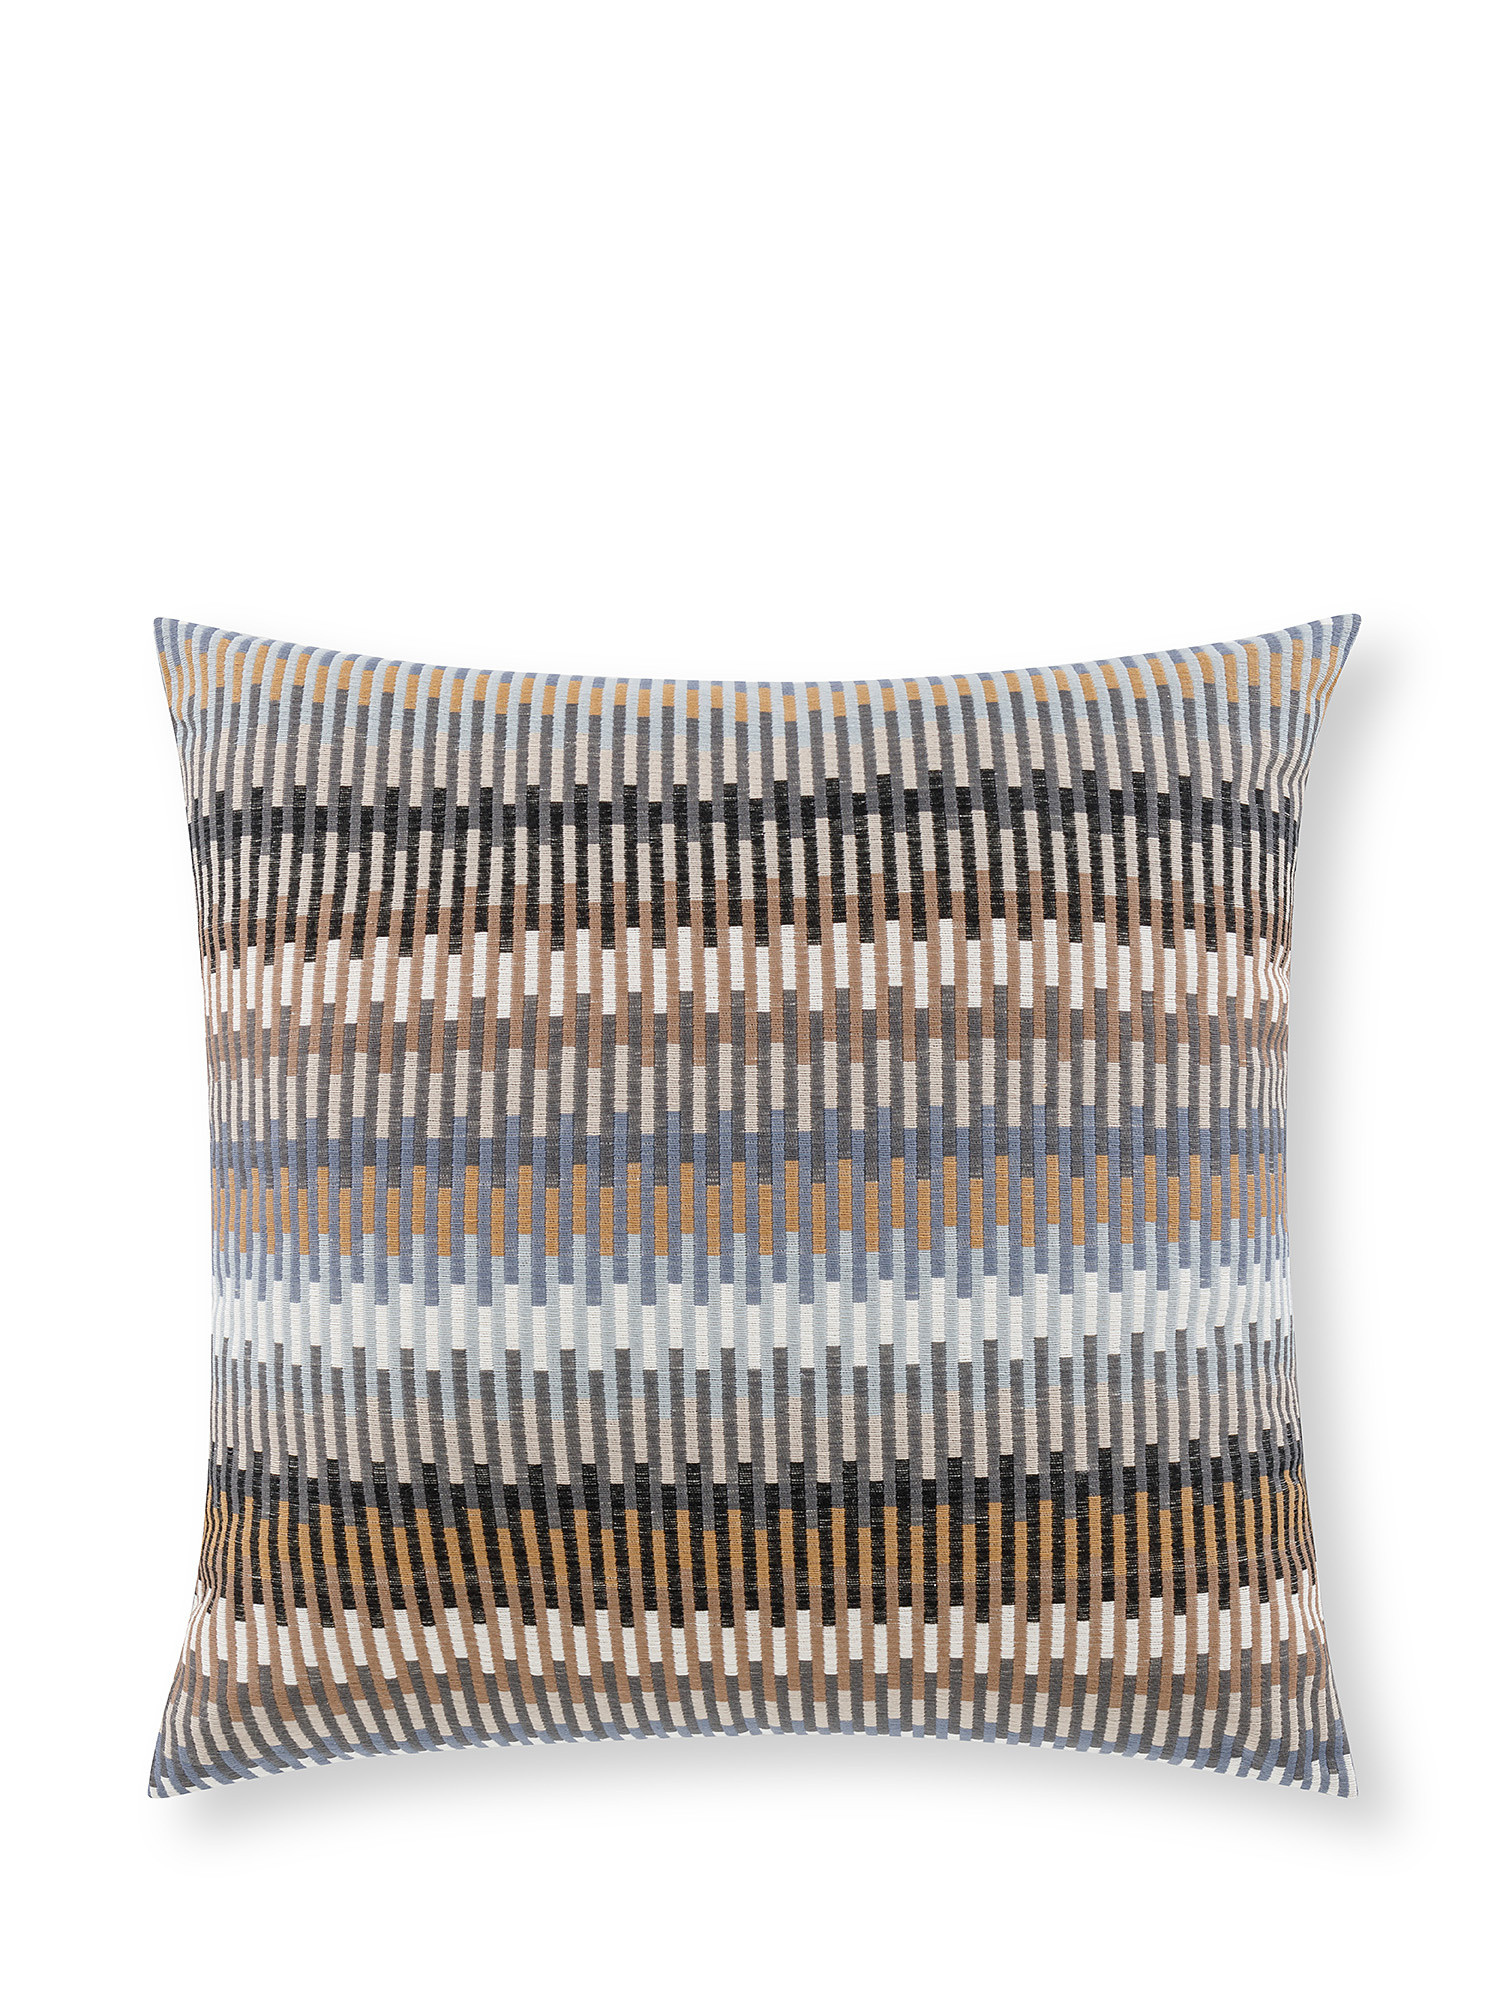 Cotton jacquard cushion with geometric pattern 45x45cm, Beige, large image number 0